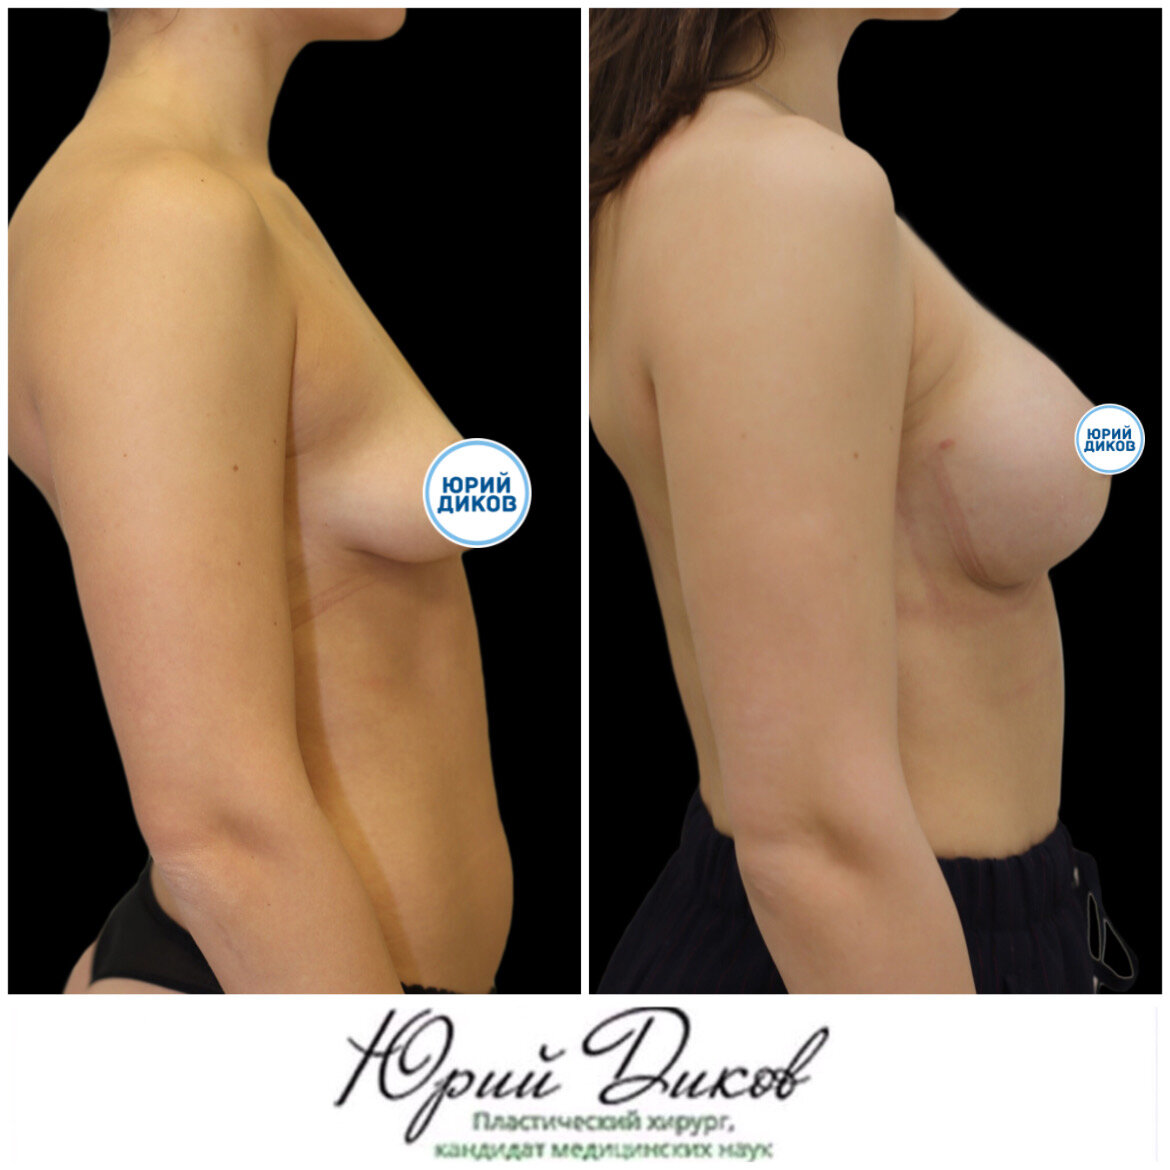 тубулярная деформация груди у женщин фото 27